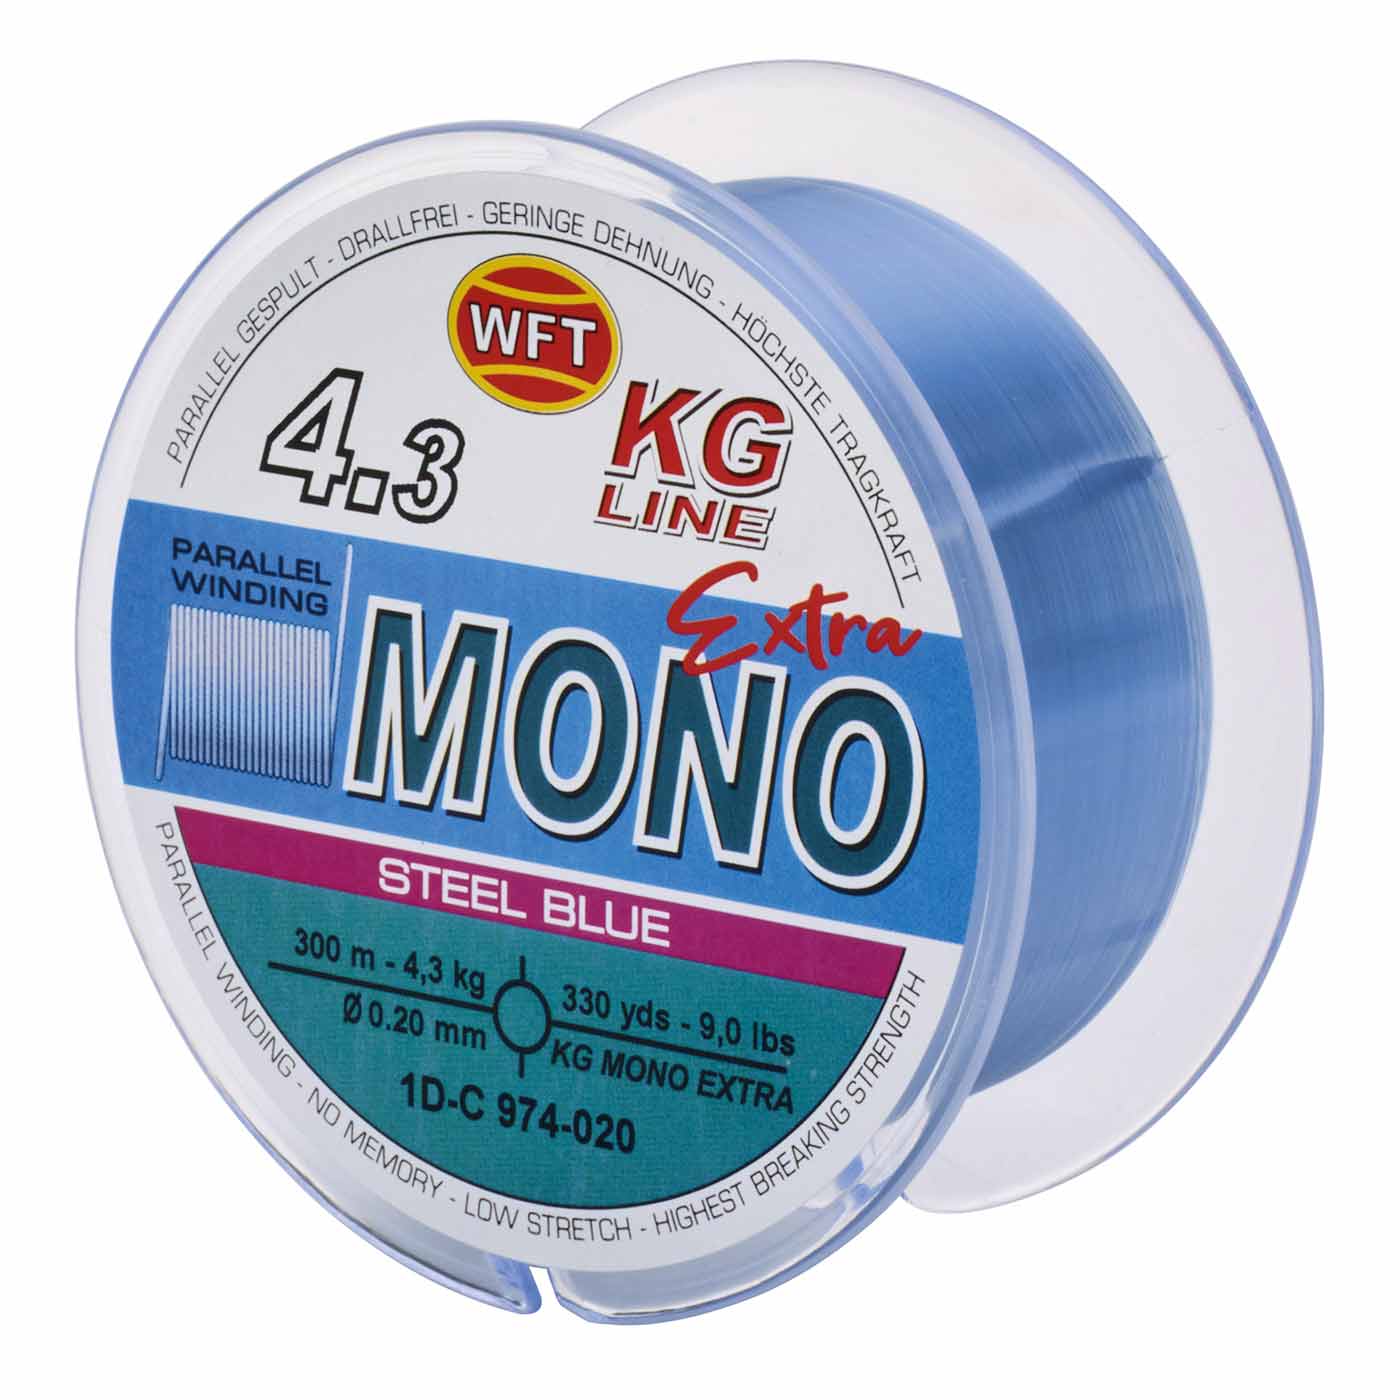 WFT KG Line Mono Extra Steel Blue 0.20 mm 4.3 kg 300 m